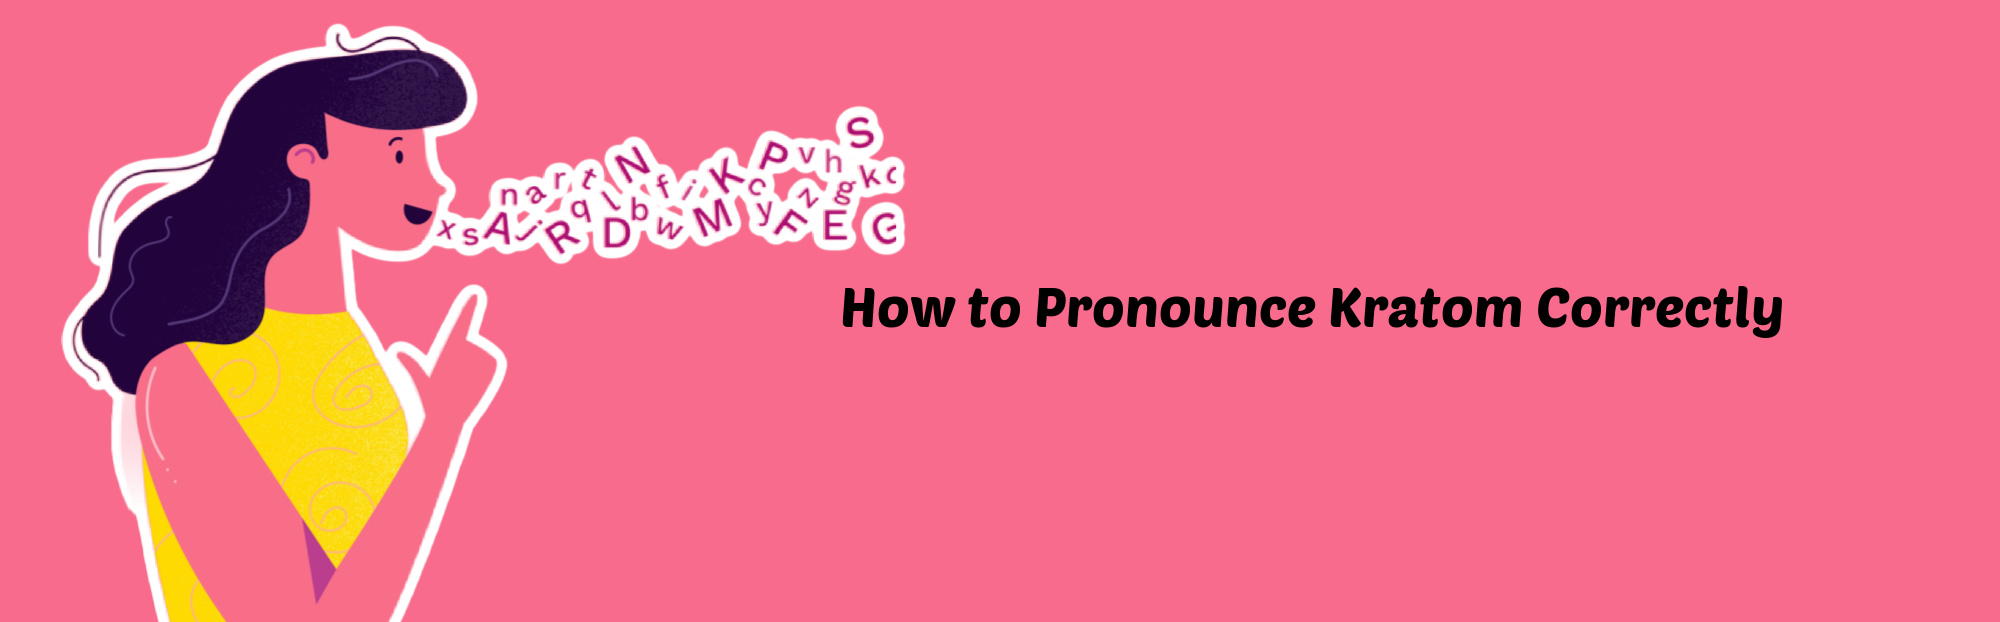 image of how to pronunce kratom correctly